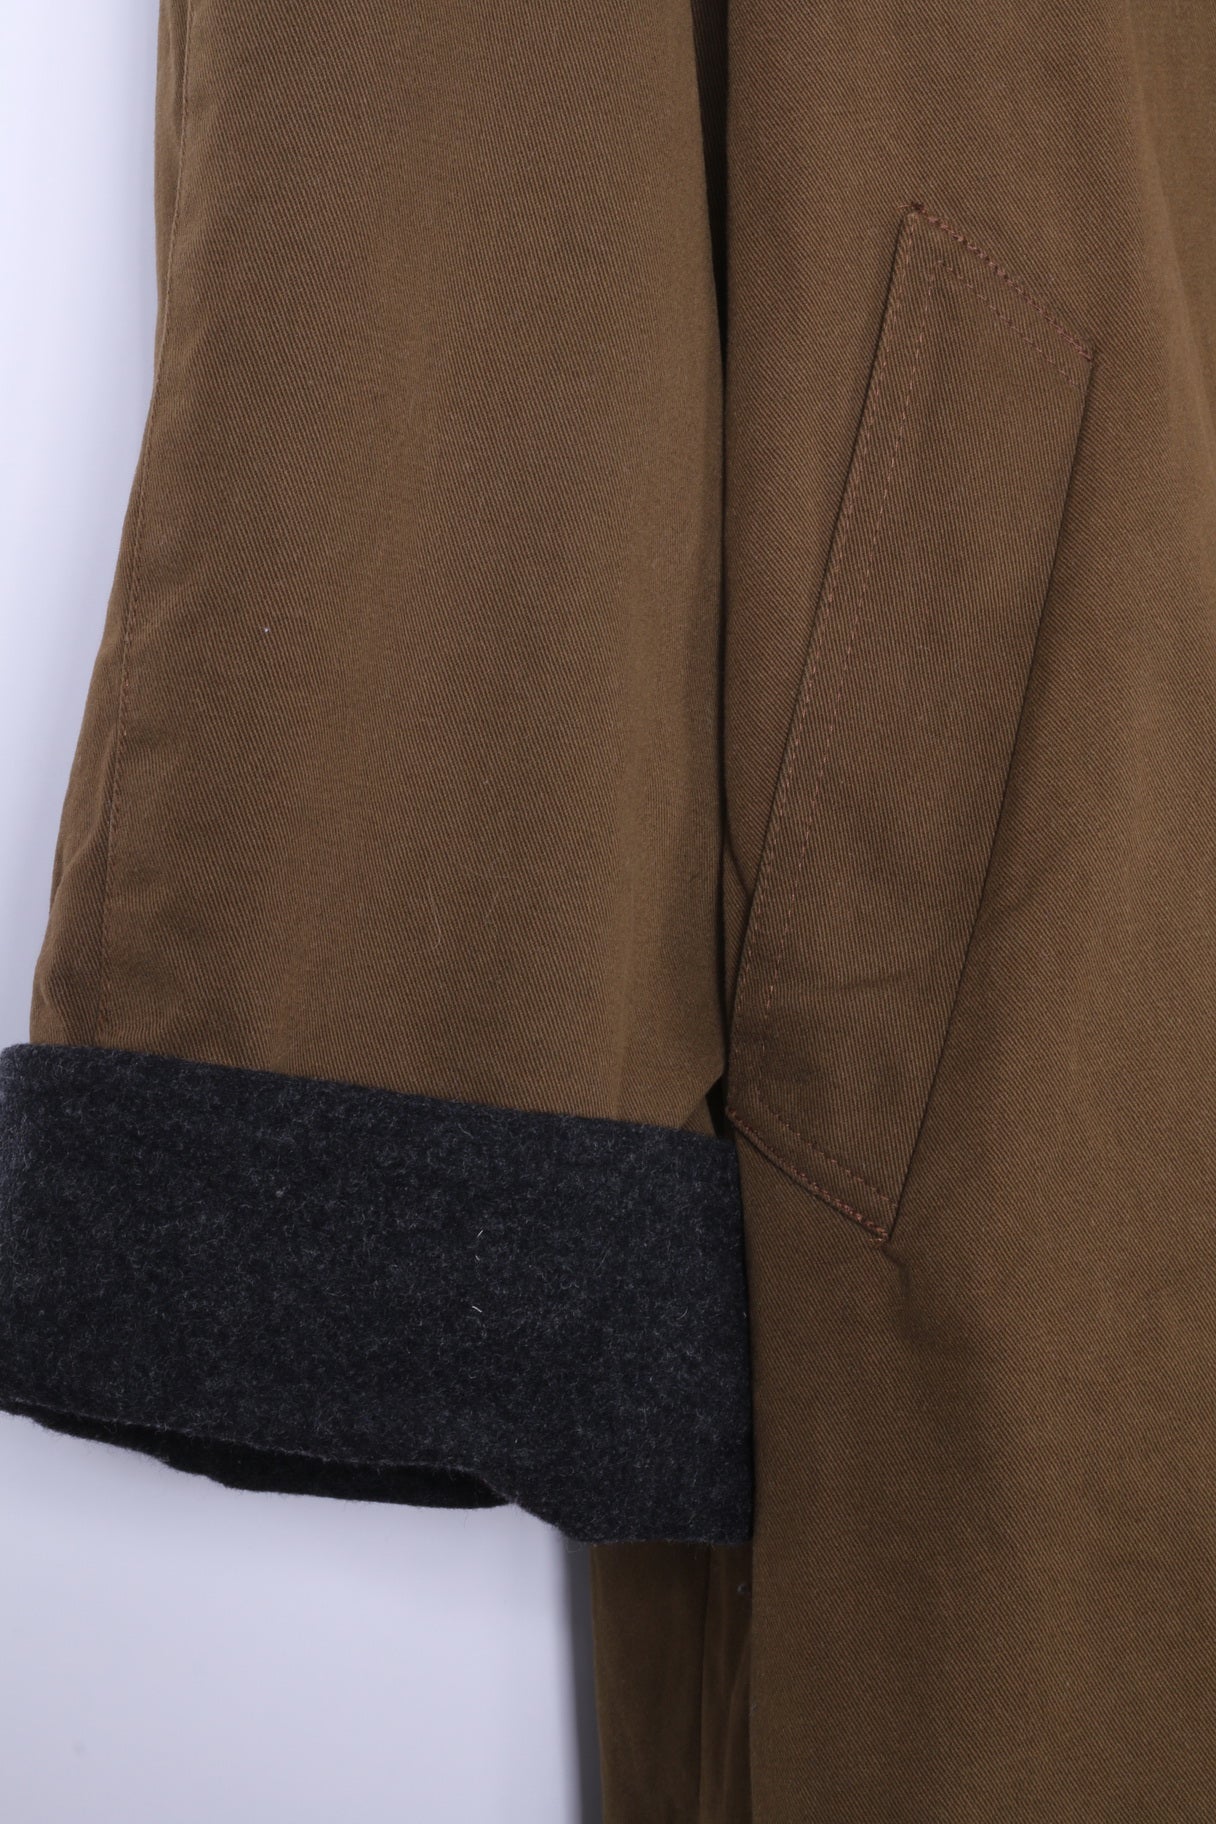 MILO Coats Womens 44 XXL Coat Brown Cotton Fleece Lined Shoulder Pads Classic